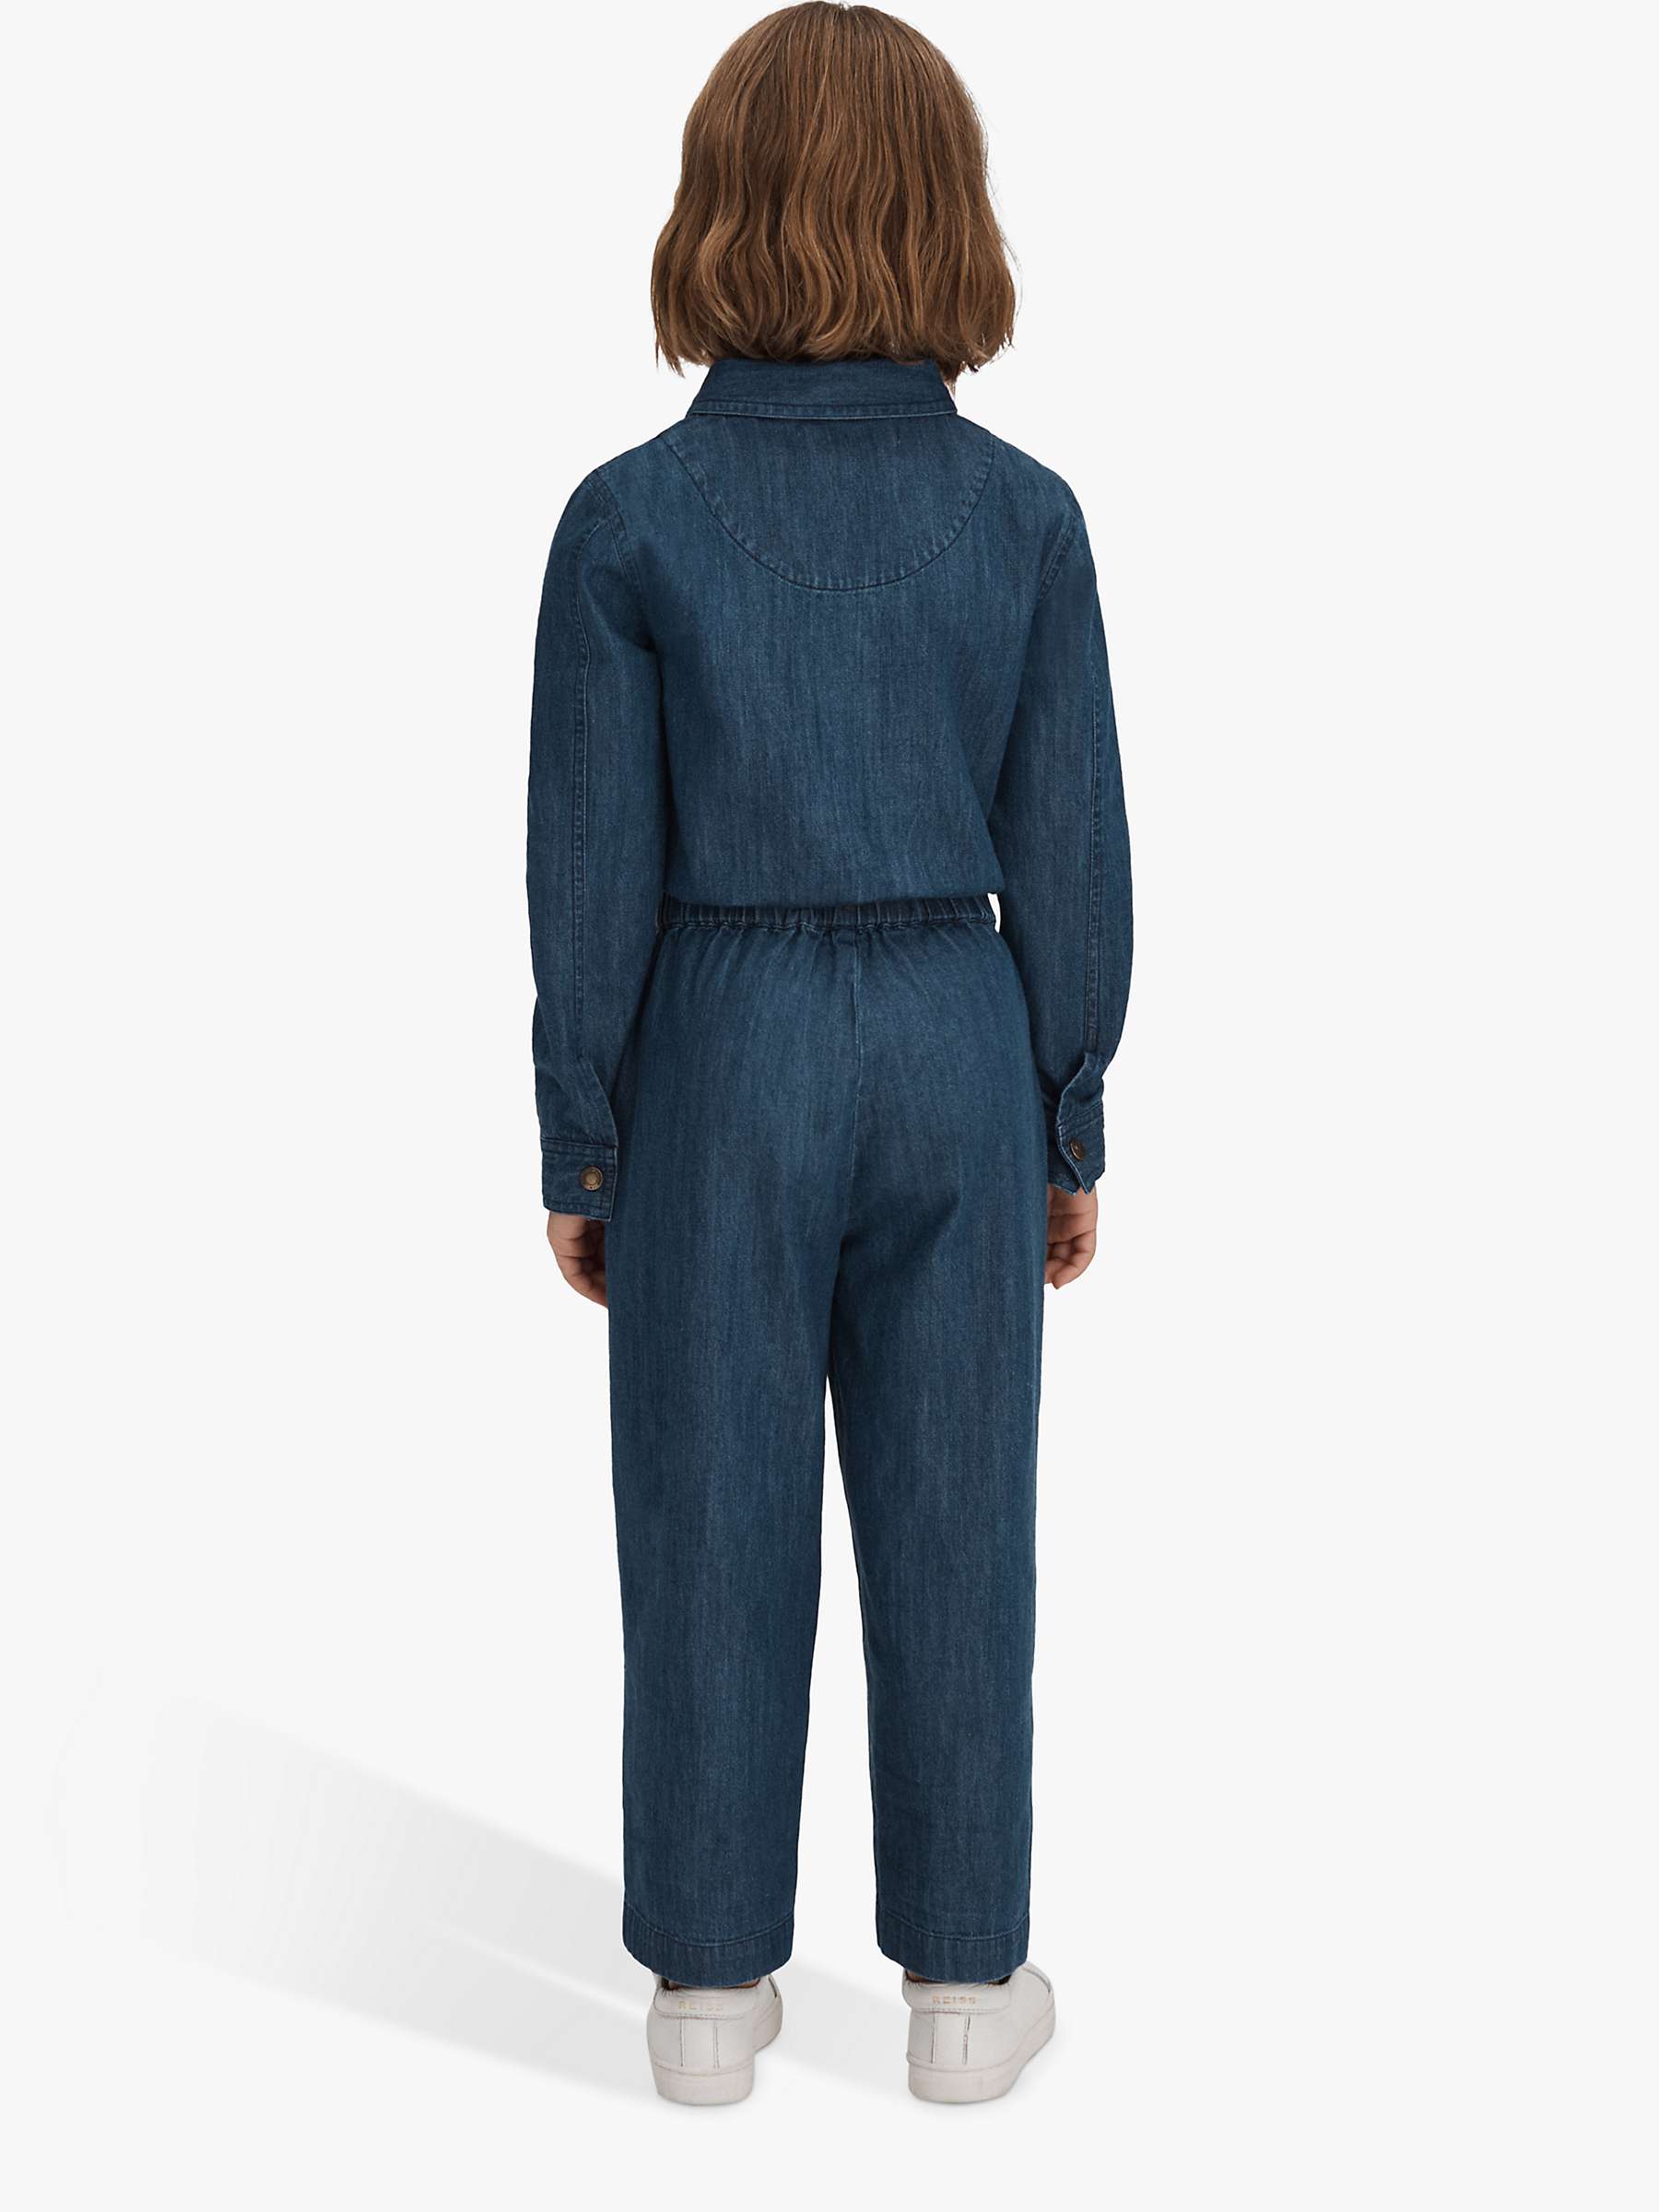 Buy Reiss Kids' Marnie Elasticated Embellished Denim Jumpsuit, Blue Online at johnlewis.com